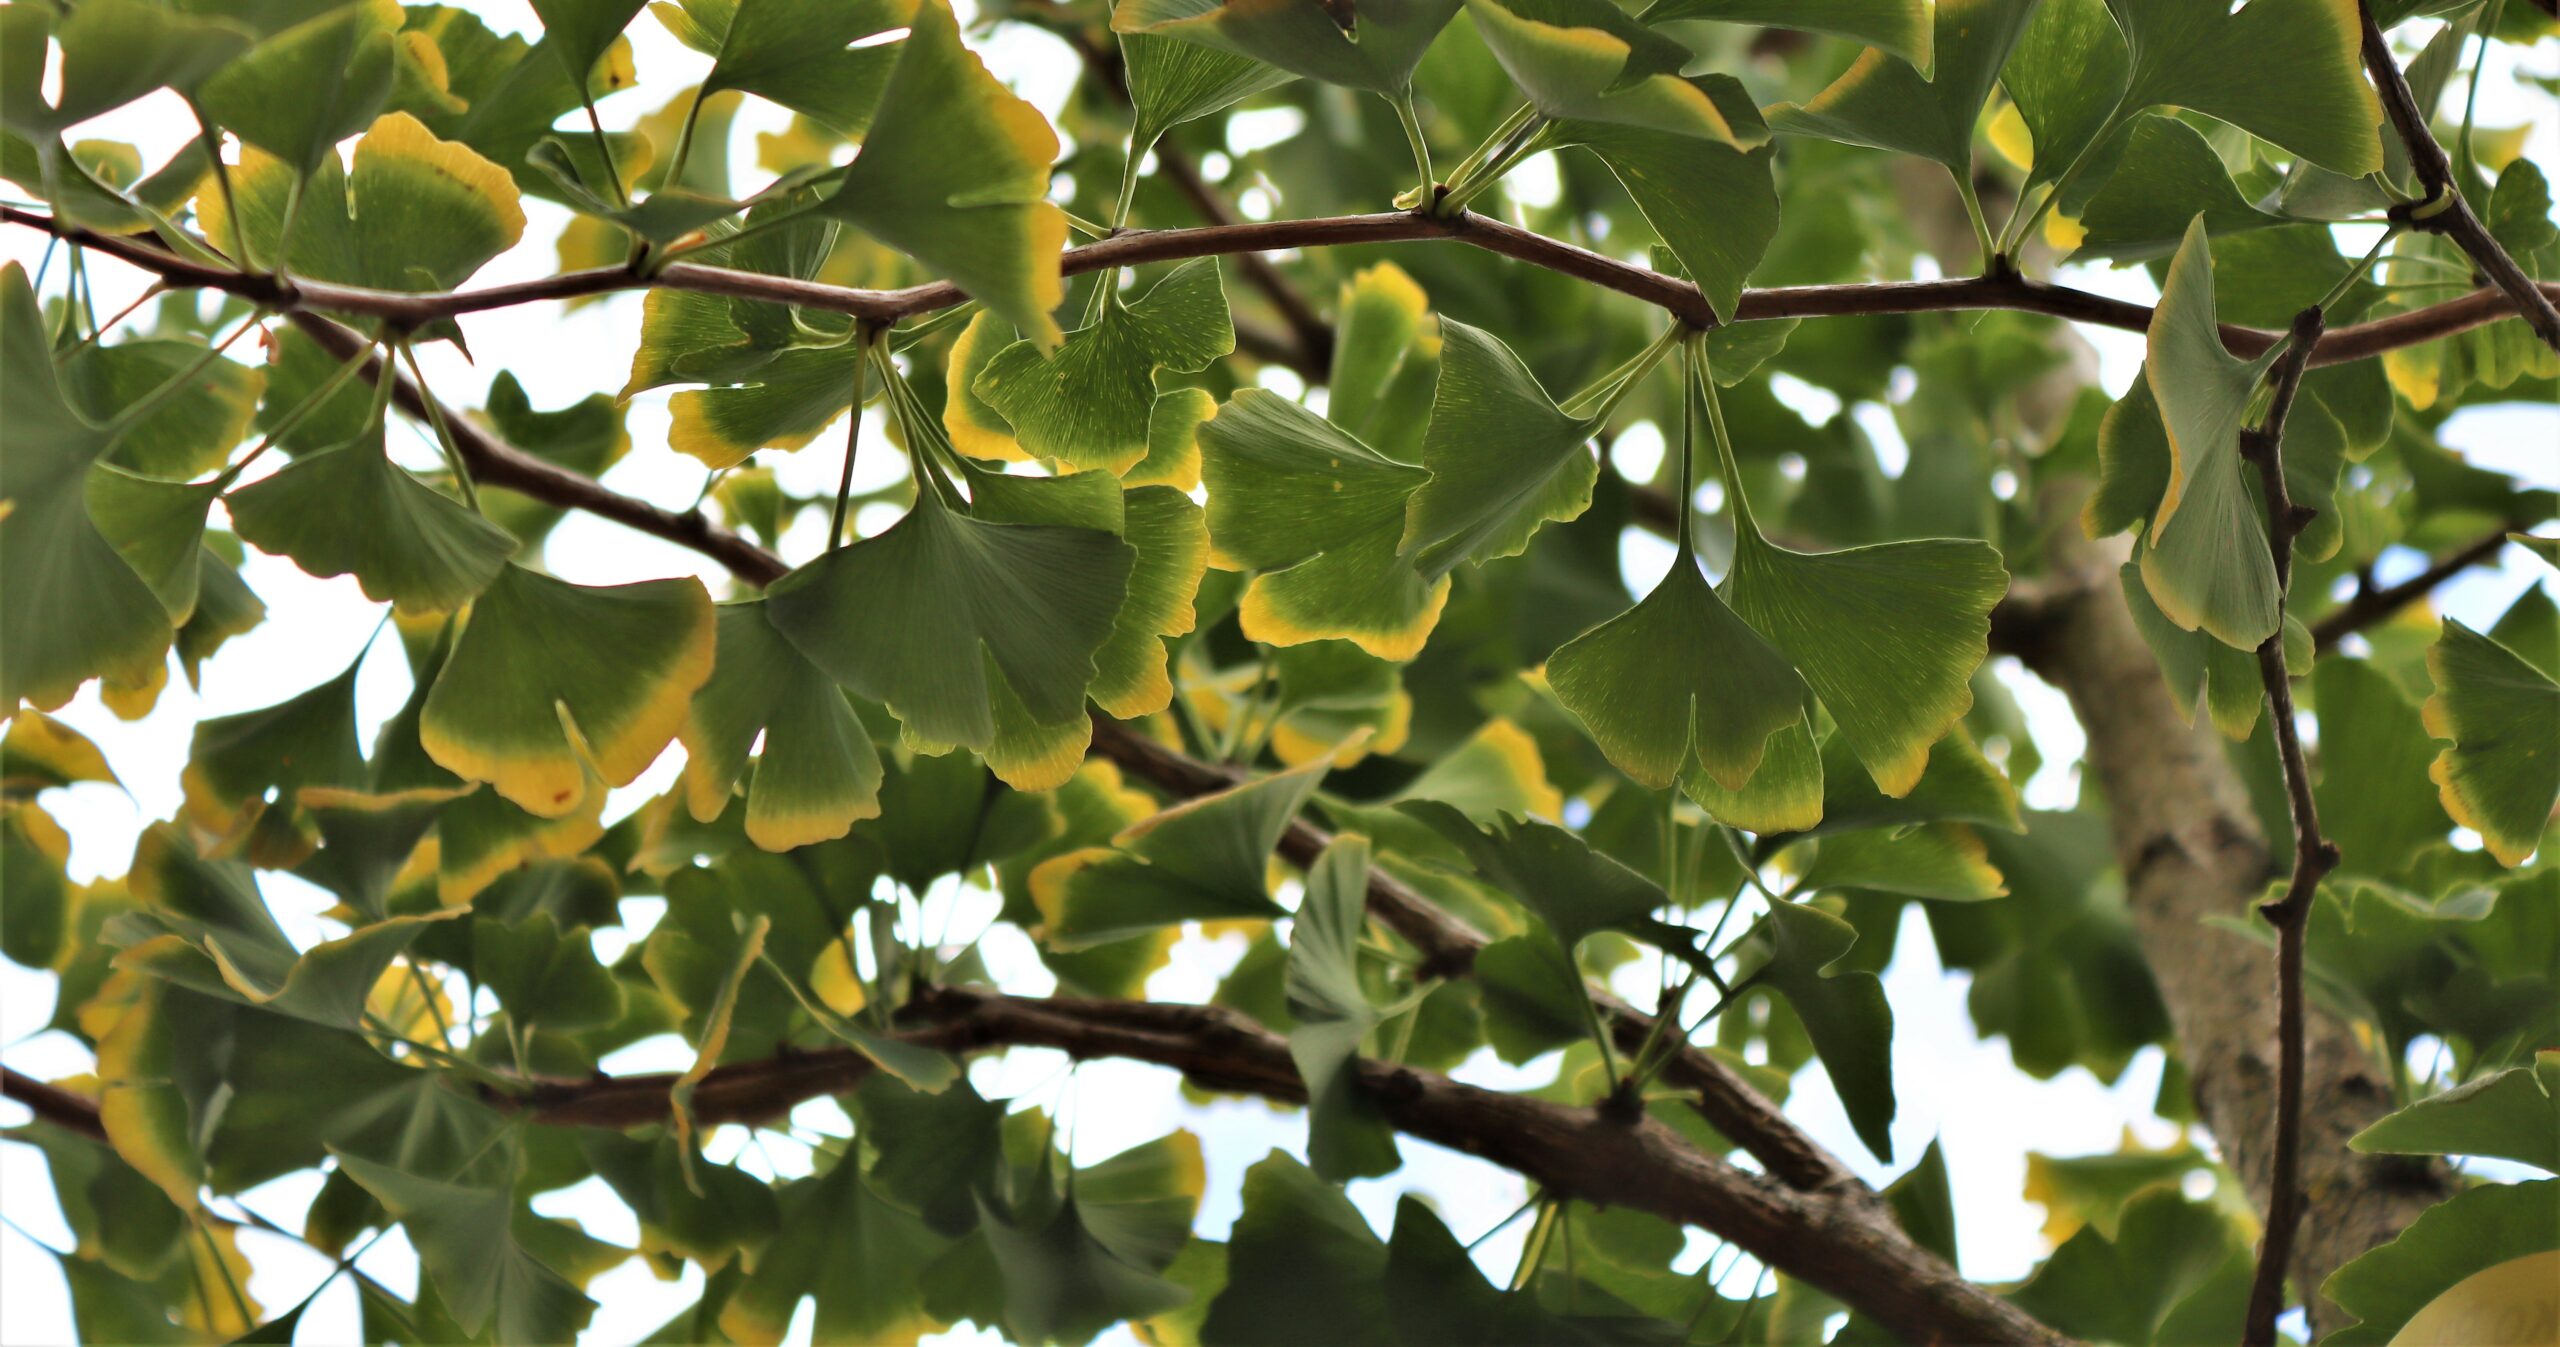 Ginkgo biloba green leaves with yellow fringe